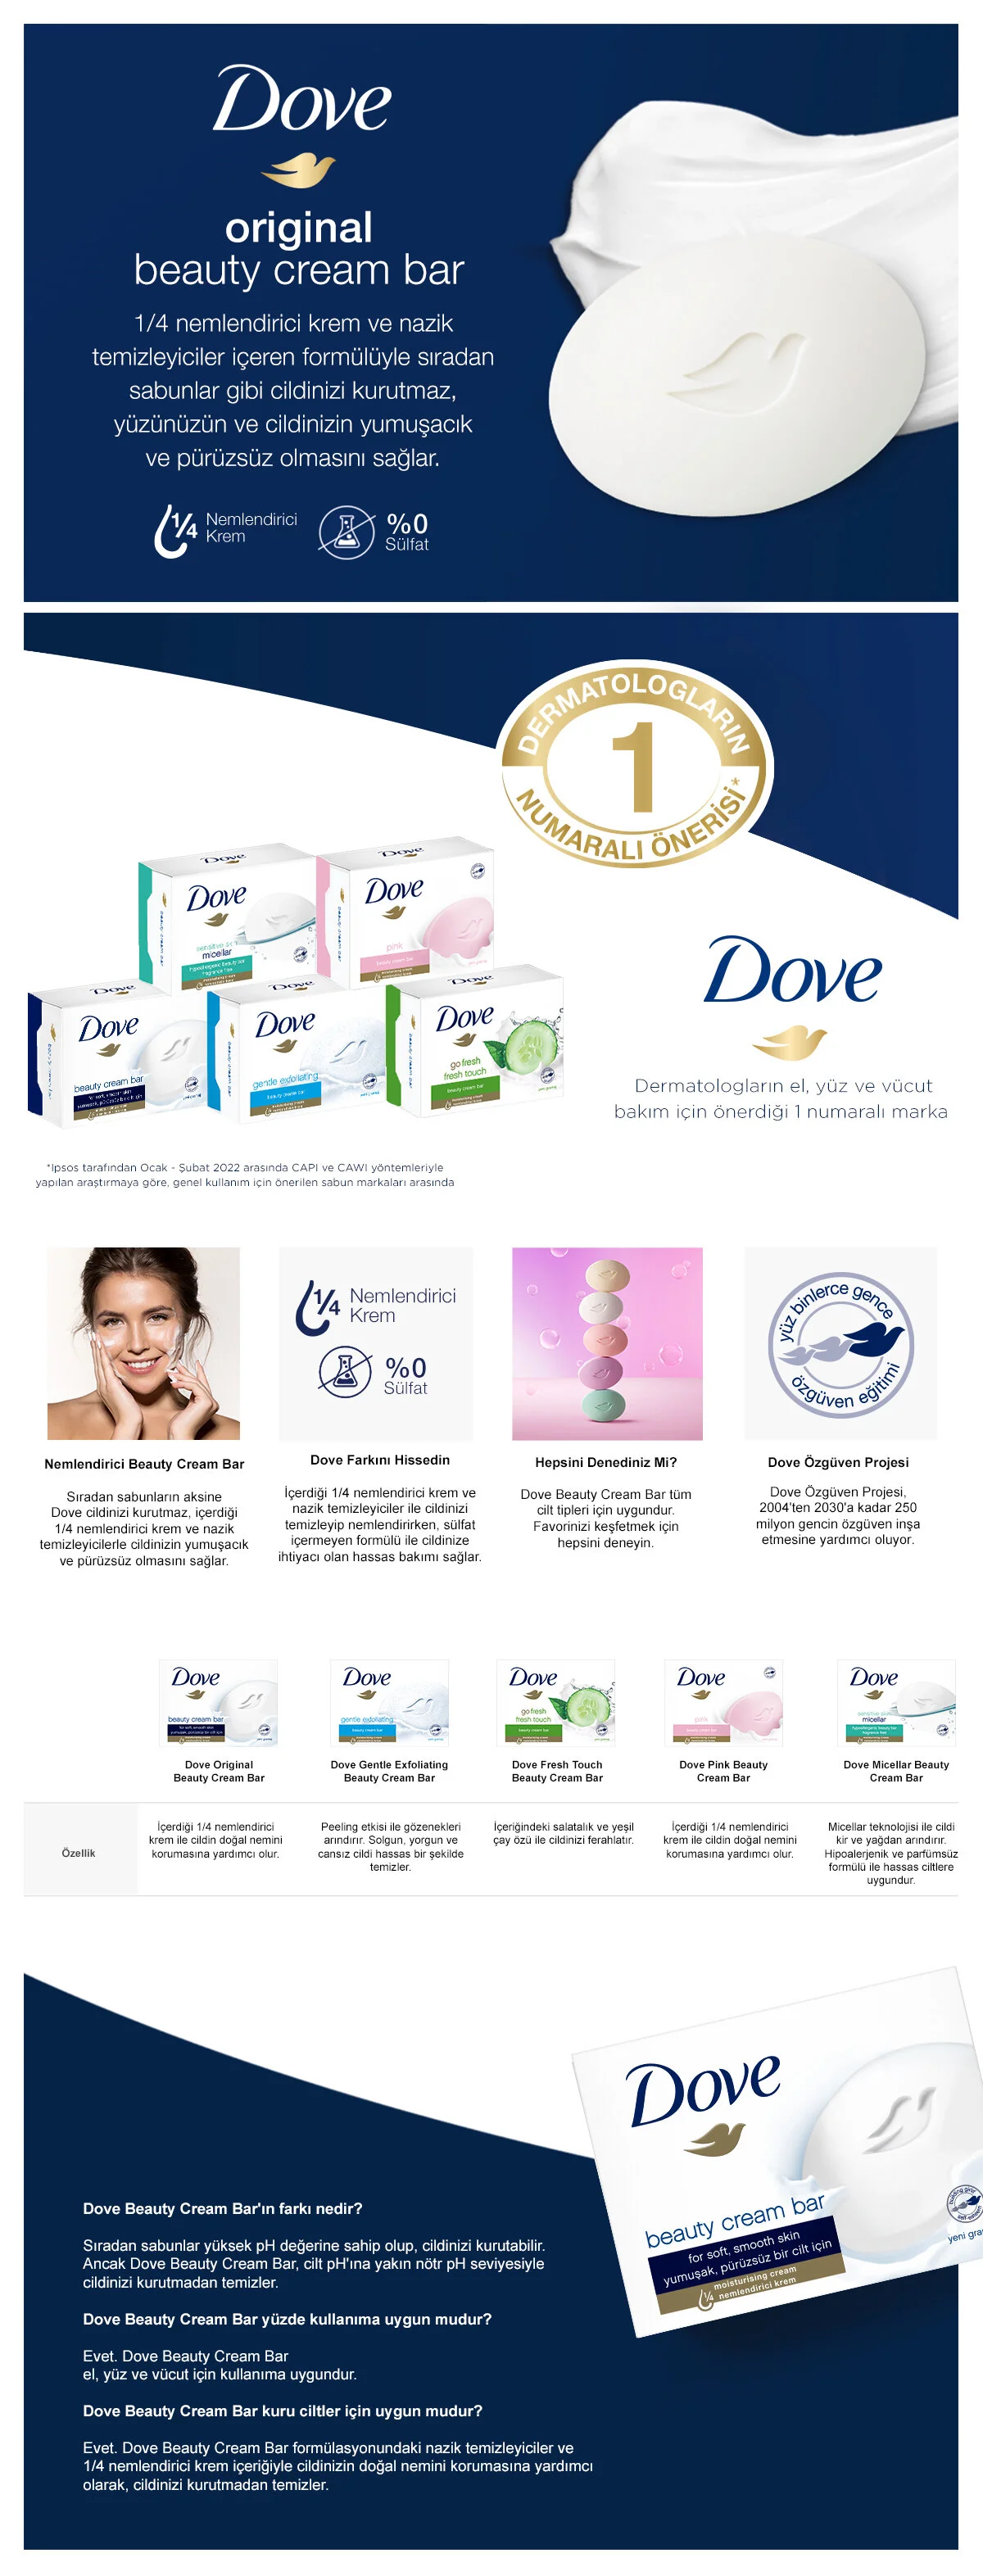 Dove beauty cream.jpg (287 KB)